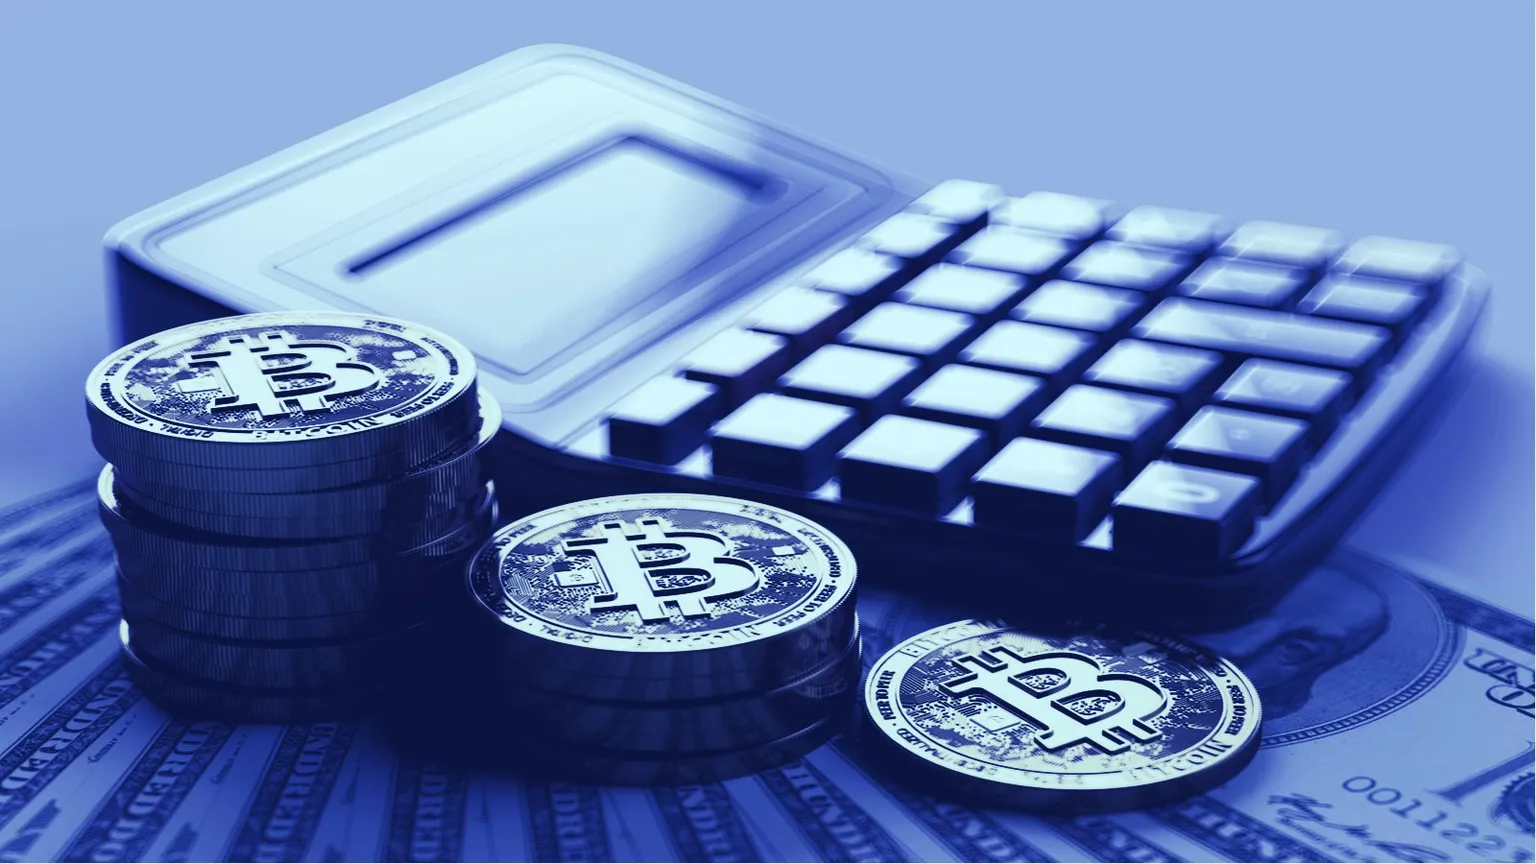 Bitcoin transaction fees. Image: Shutterstock